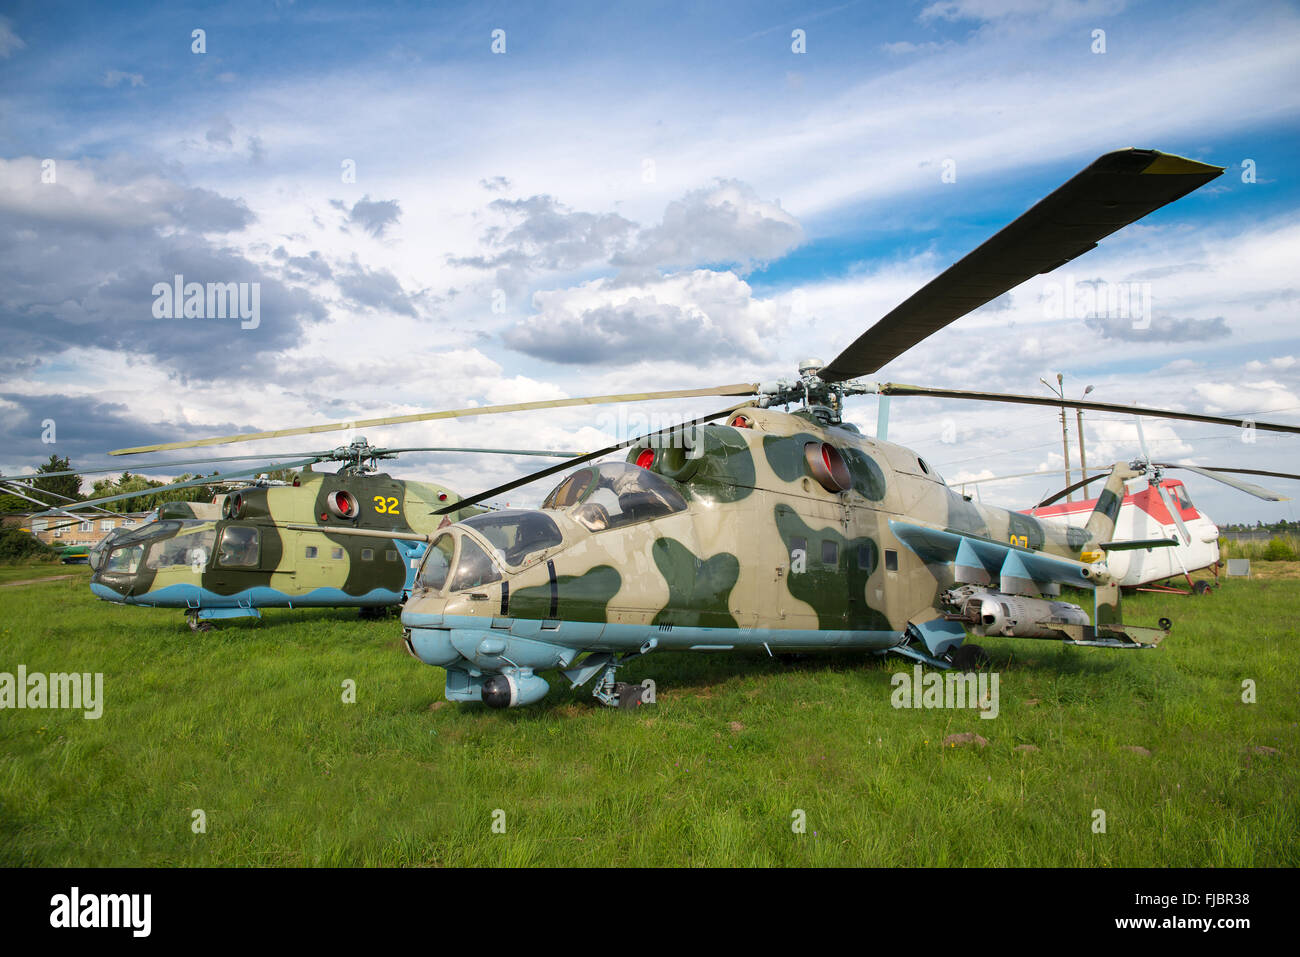 Helicóptero Foto de stock